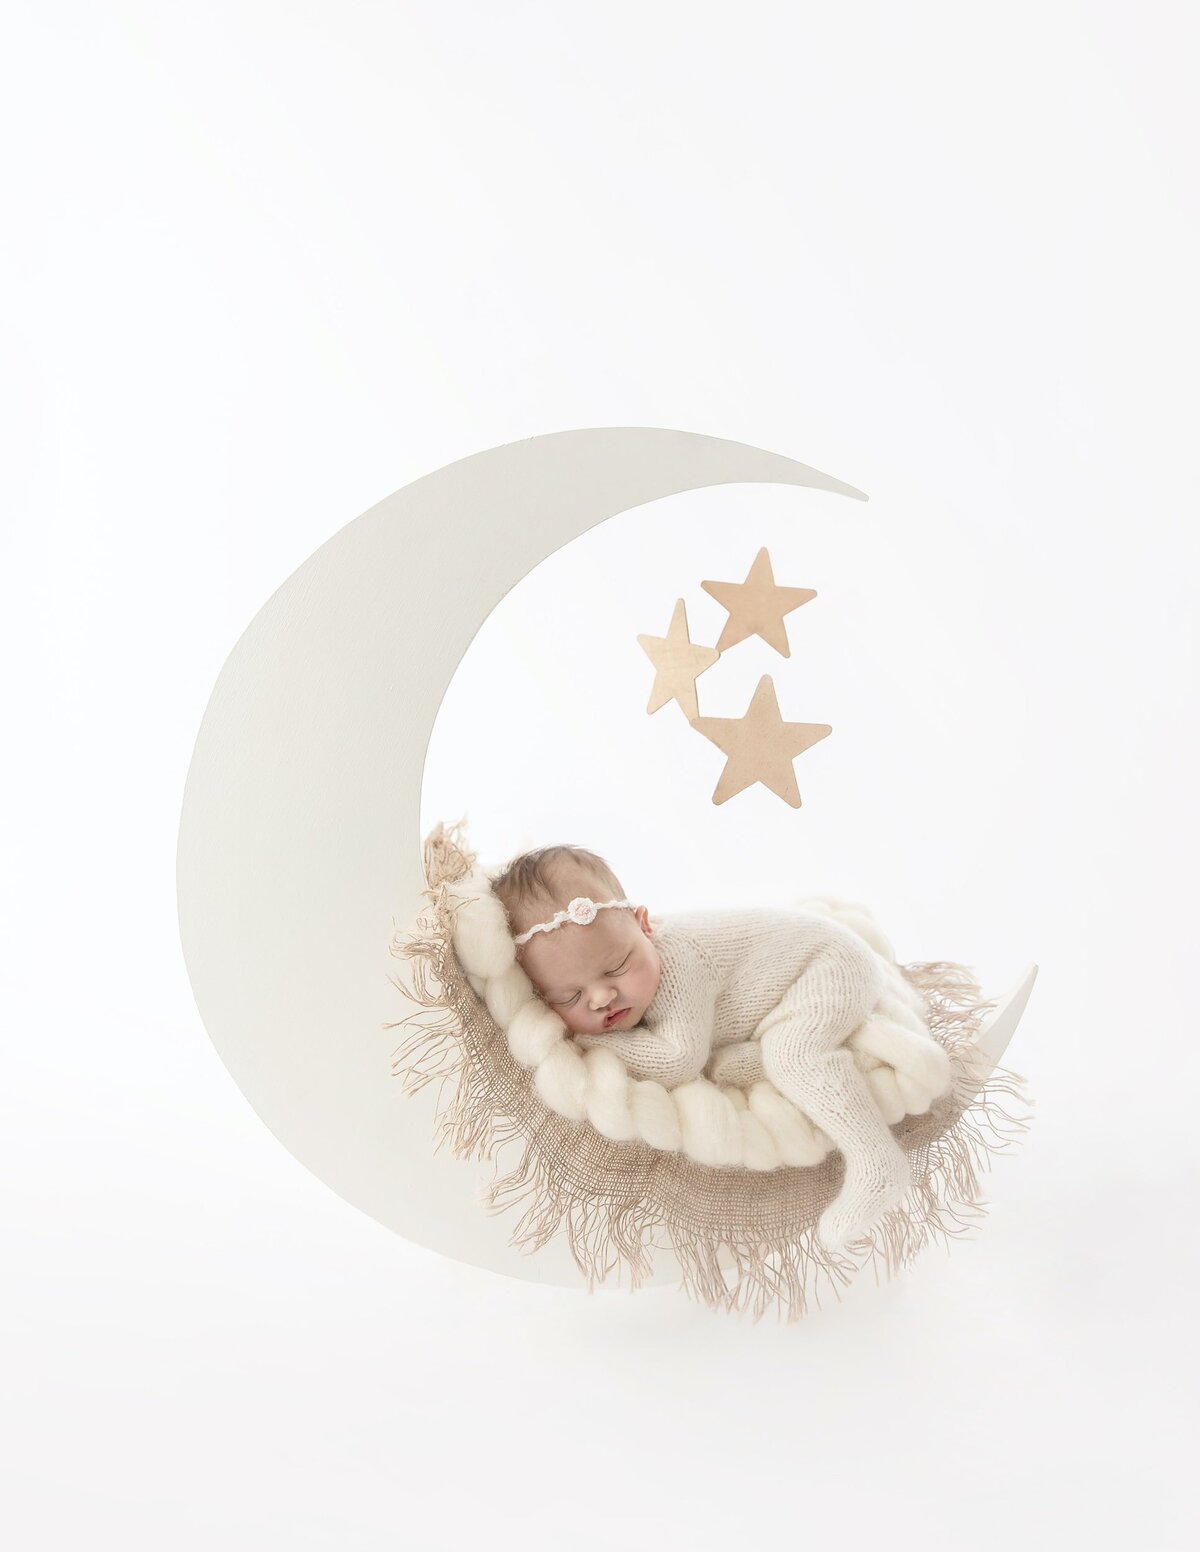 Newborn girl on moon and stars